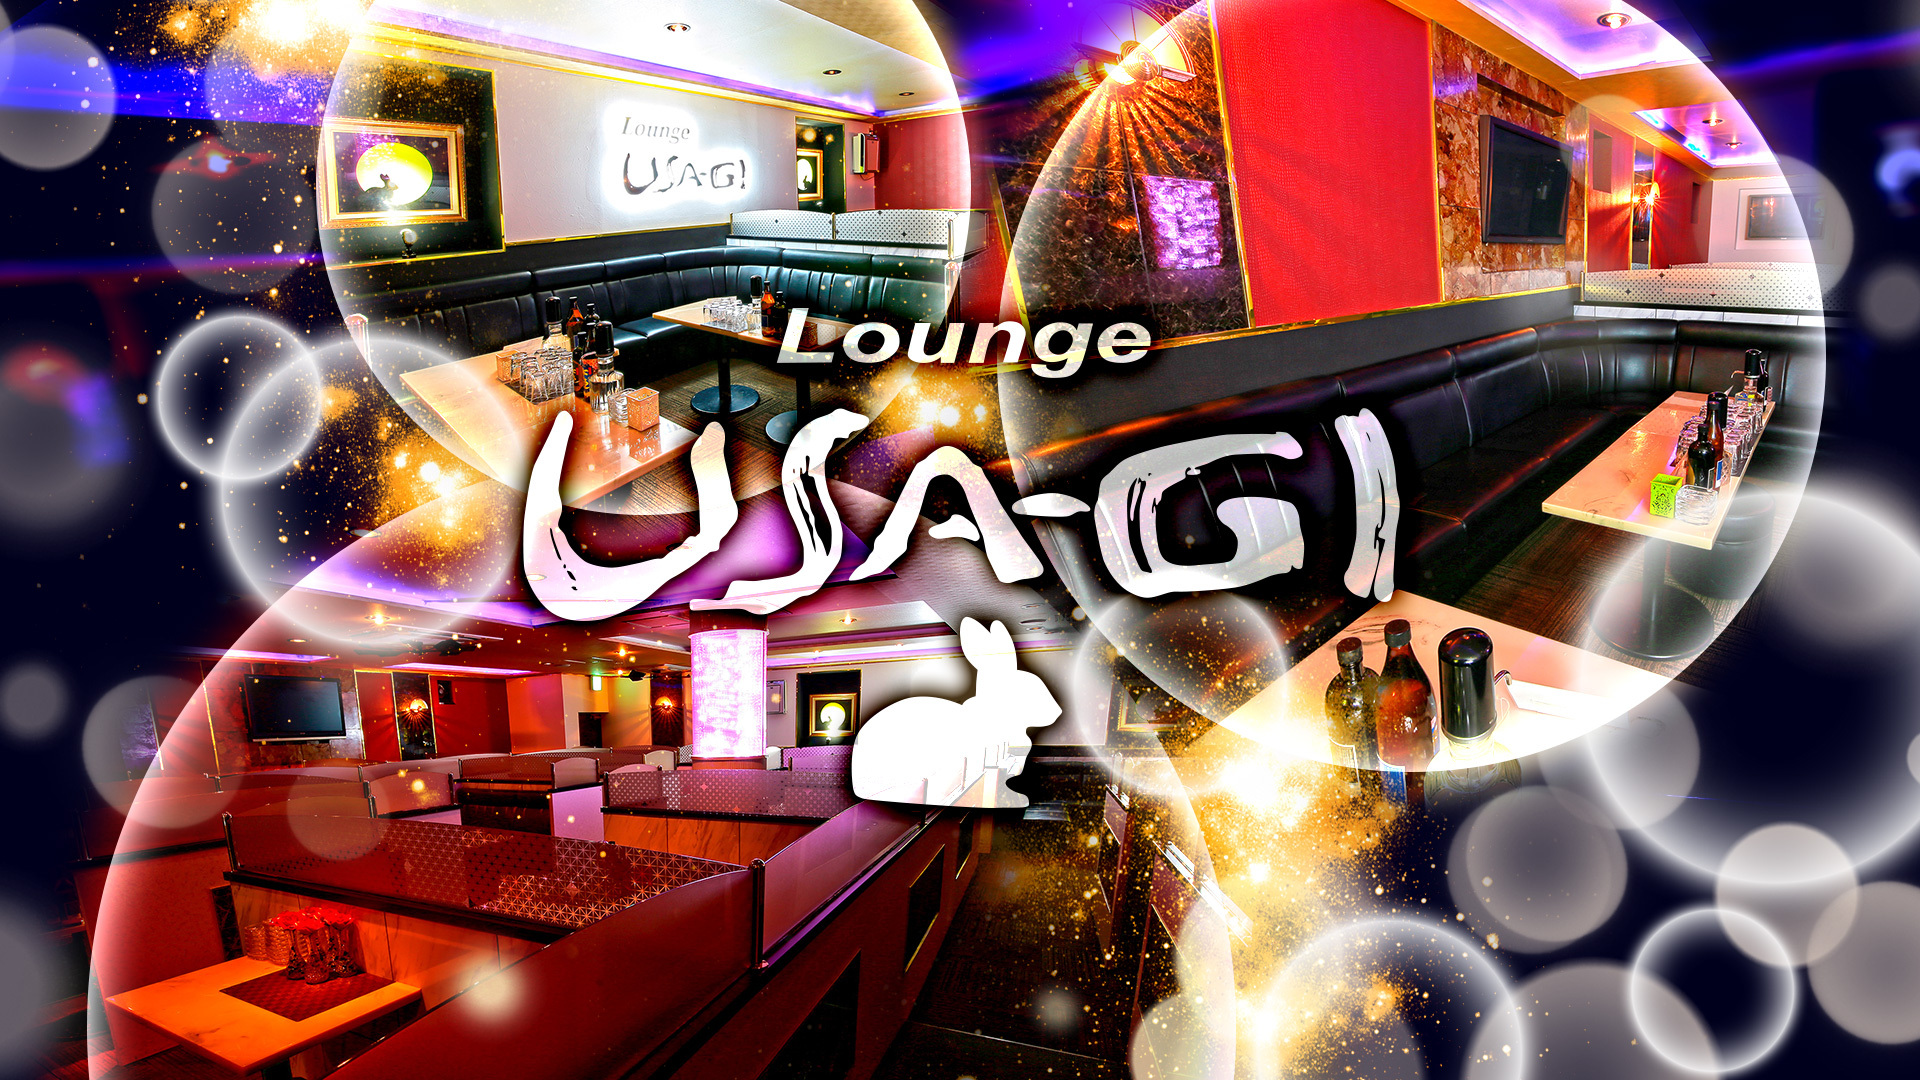 Lounge Usa Gi ウサギ 宮崎市高松町 キャバクラ ナイトスタイル